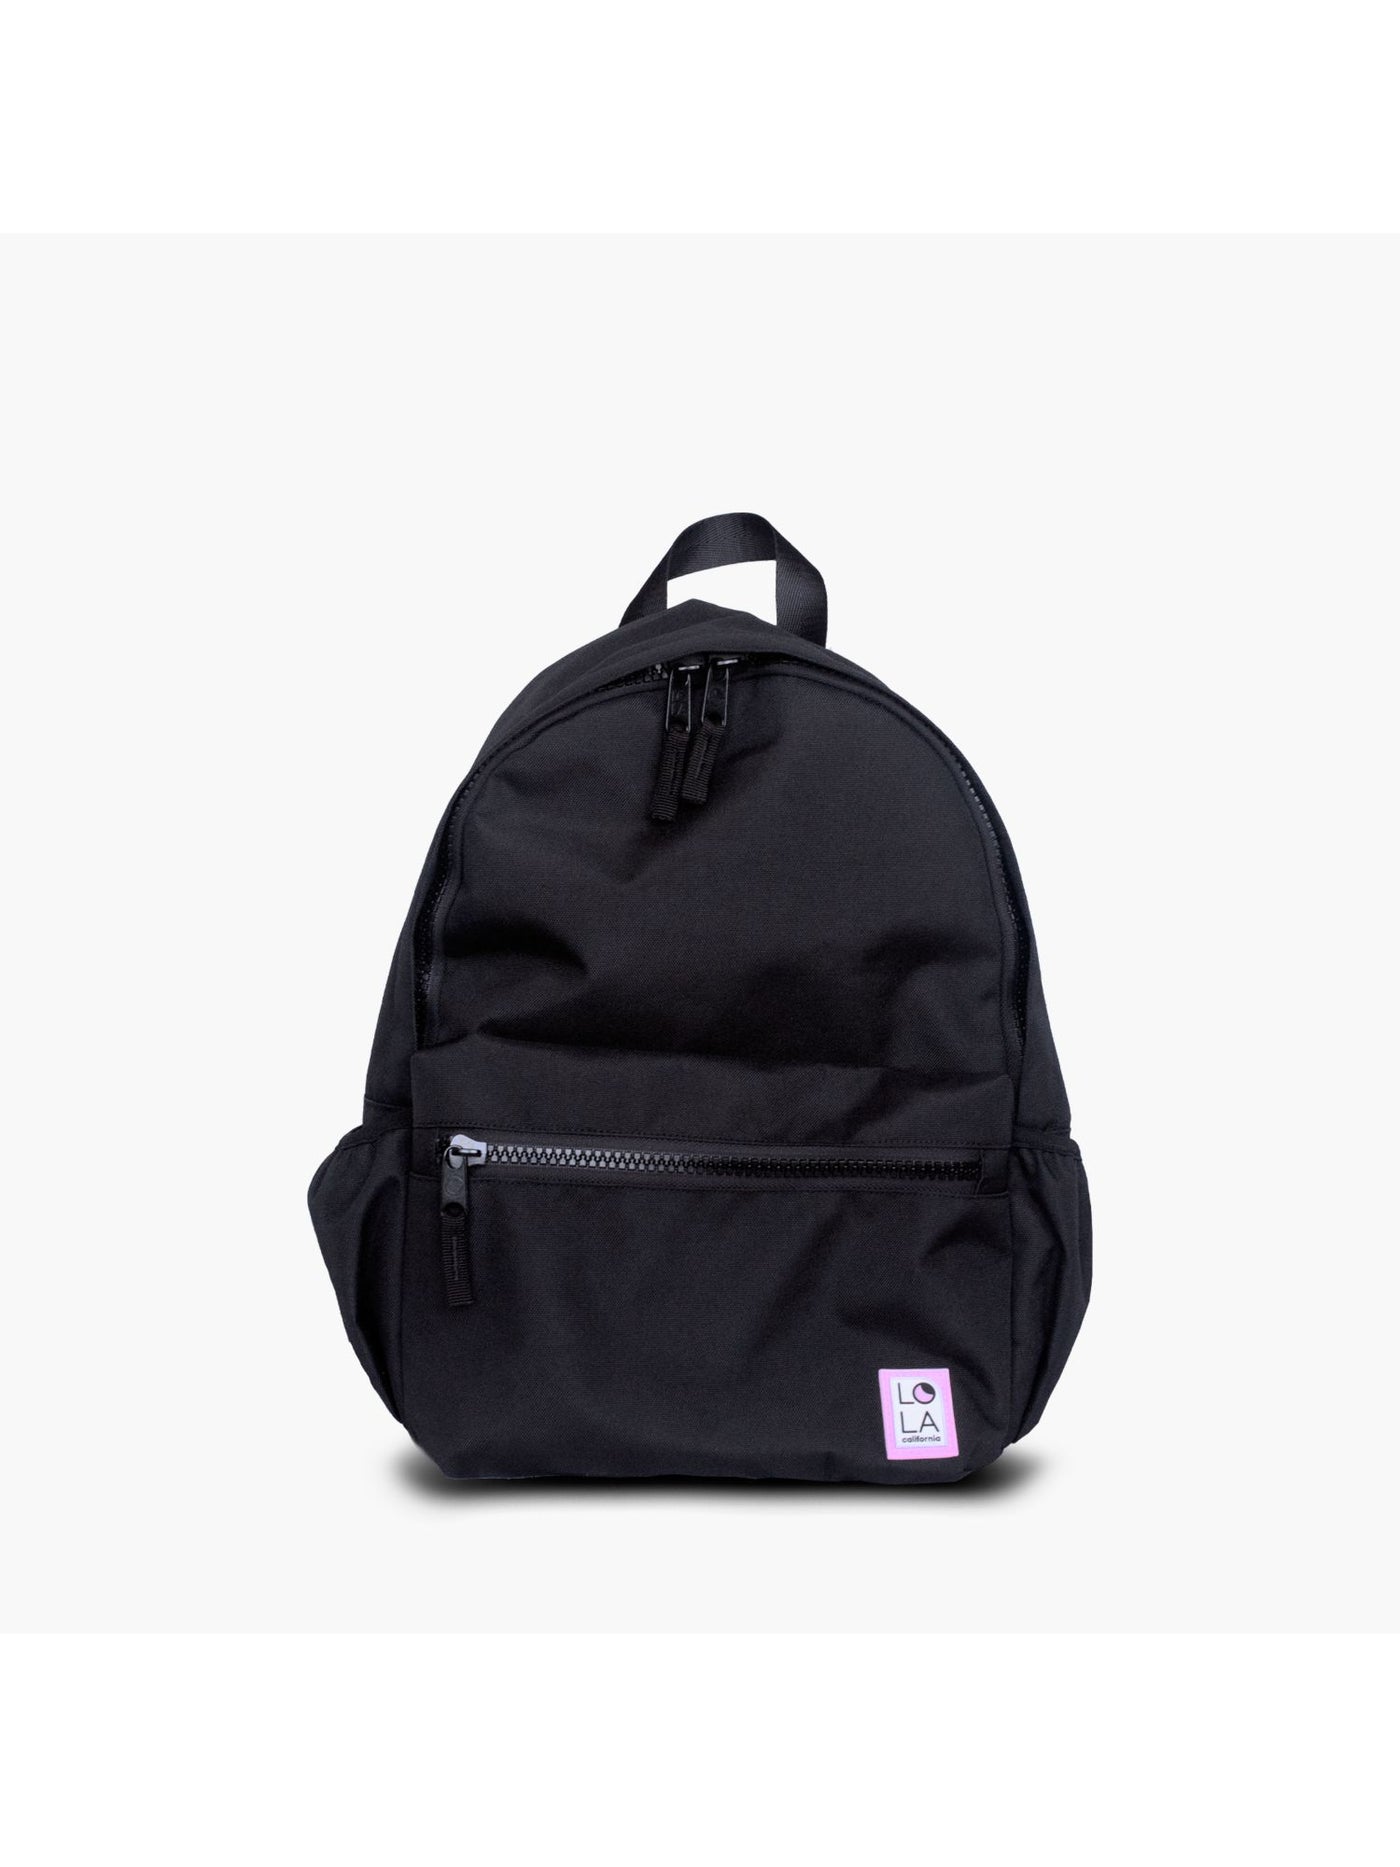 LOLA Women's Black Solid Double Flat Strap Backpack